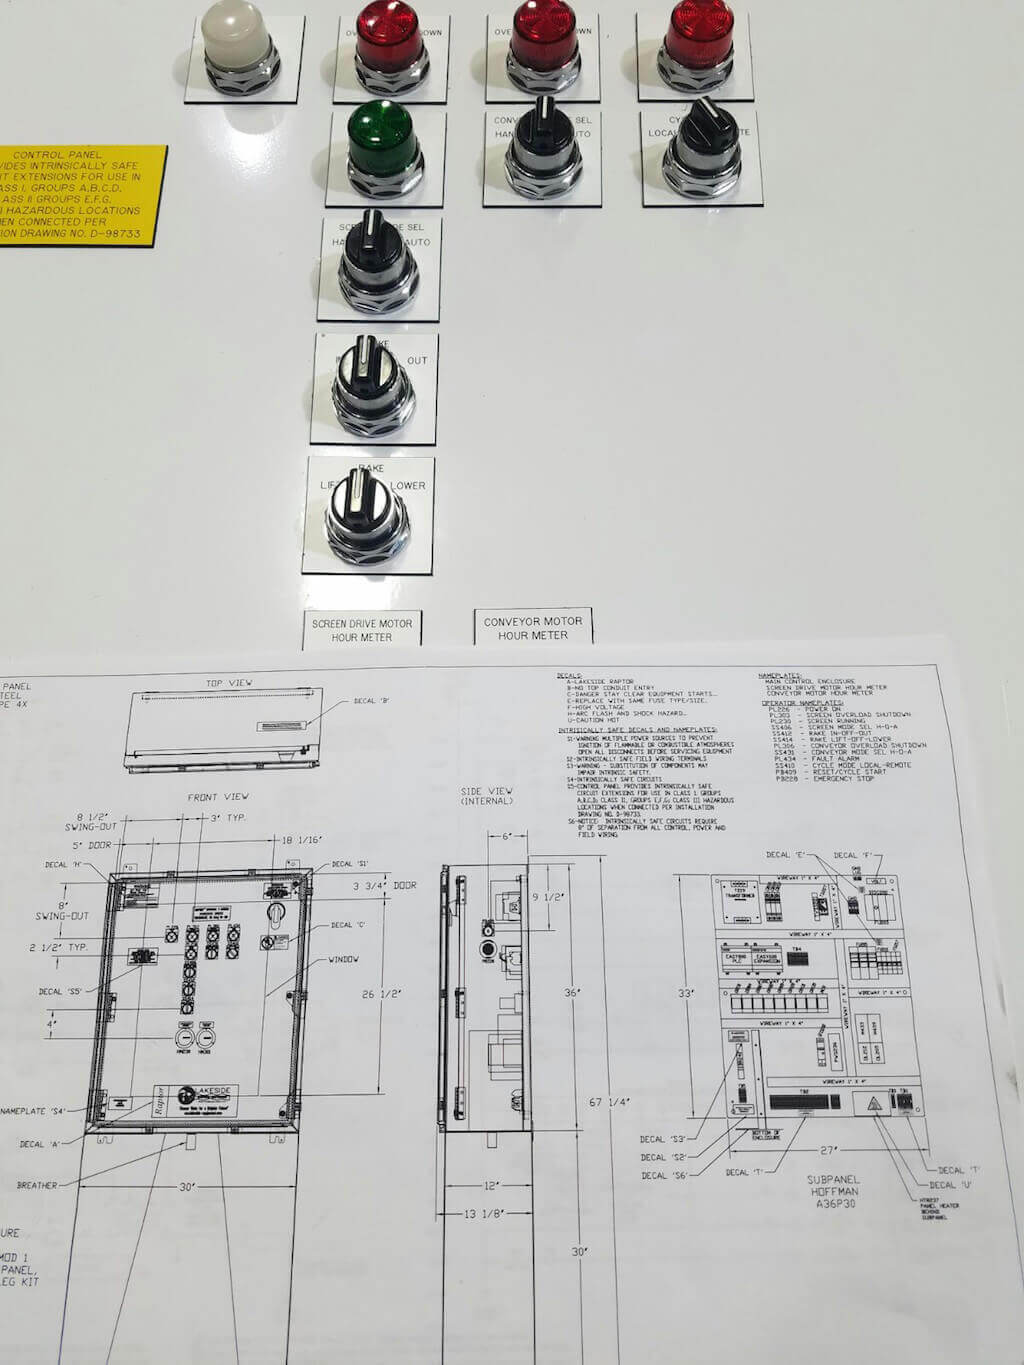 Eplan P8 Vs Autocad Electrical